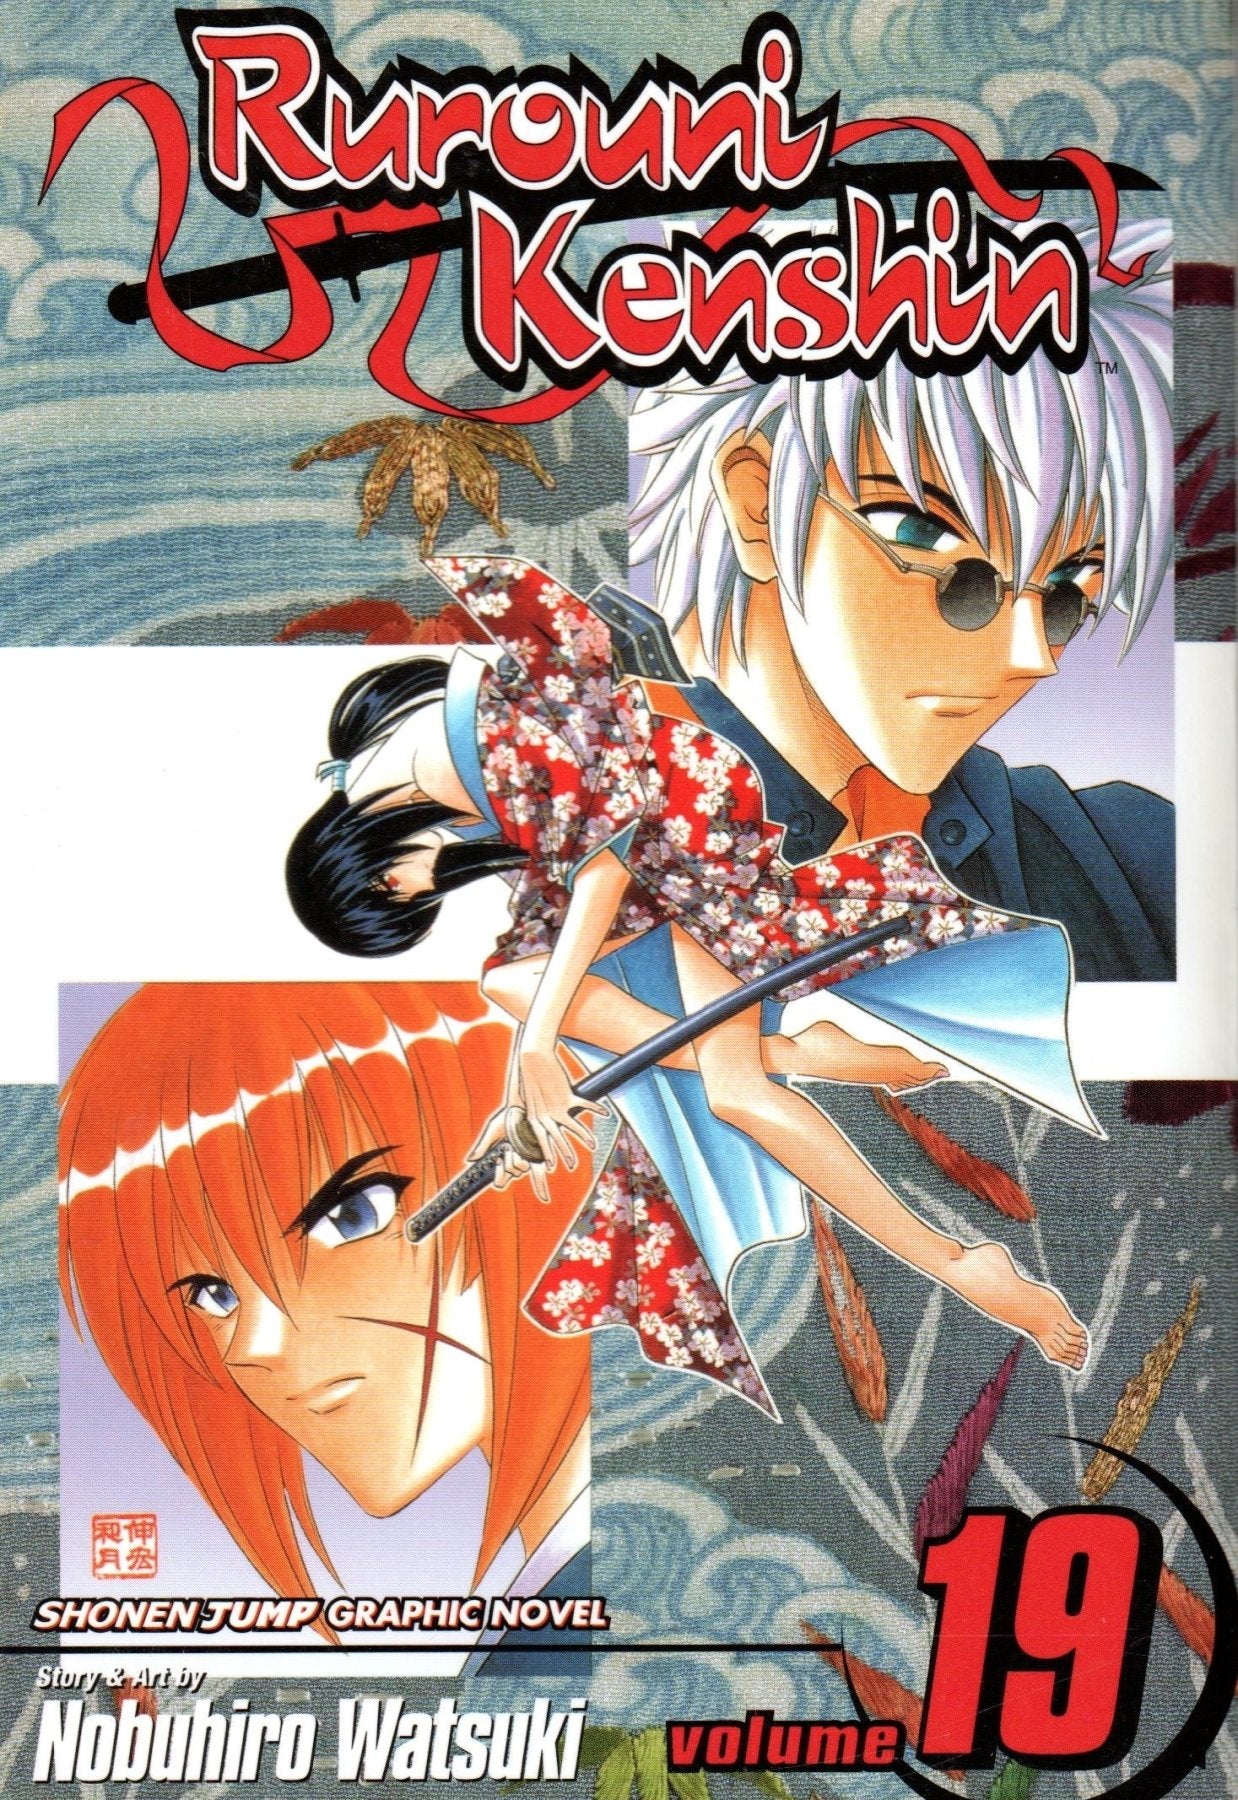 Rurouni Kenshin Vol. 19 - Manga - Retro Island Gaming